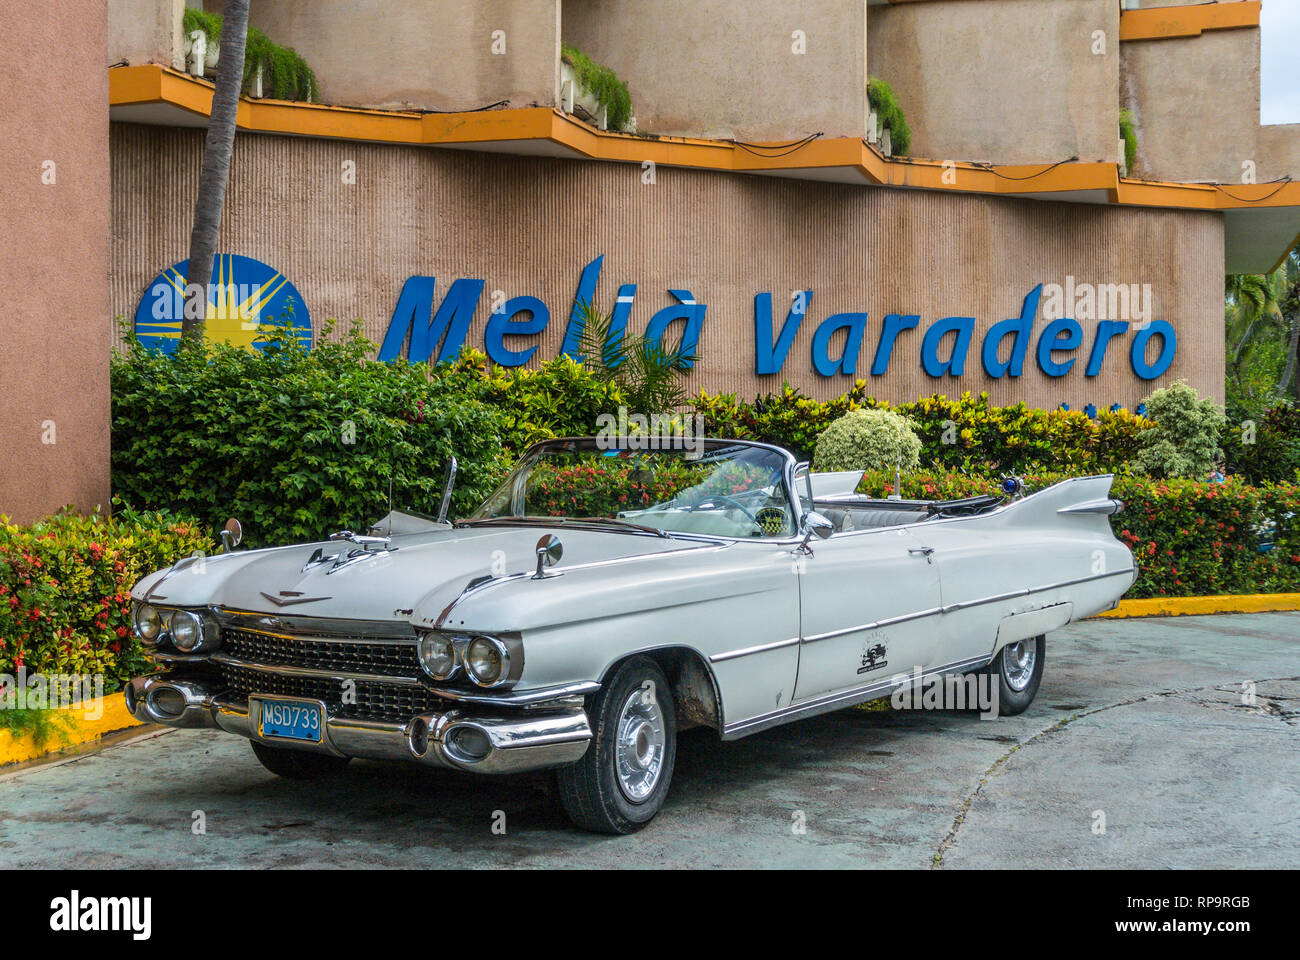 Varadero, Cuba - September 16, 2013: Vintage old classic American car in front of the Melia Varadero Hotel in Varadero, Cuba. Stock Photo